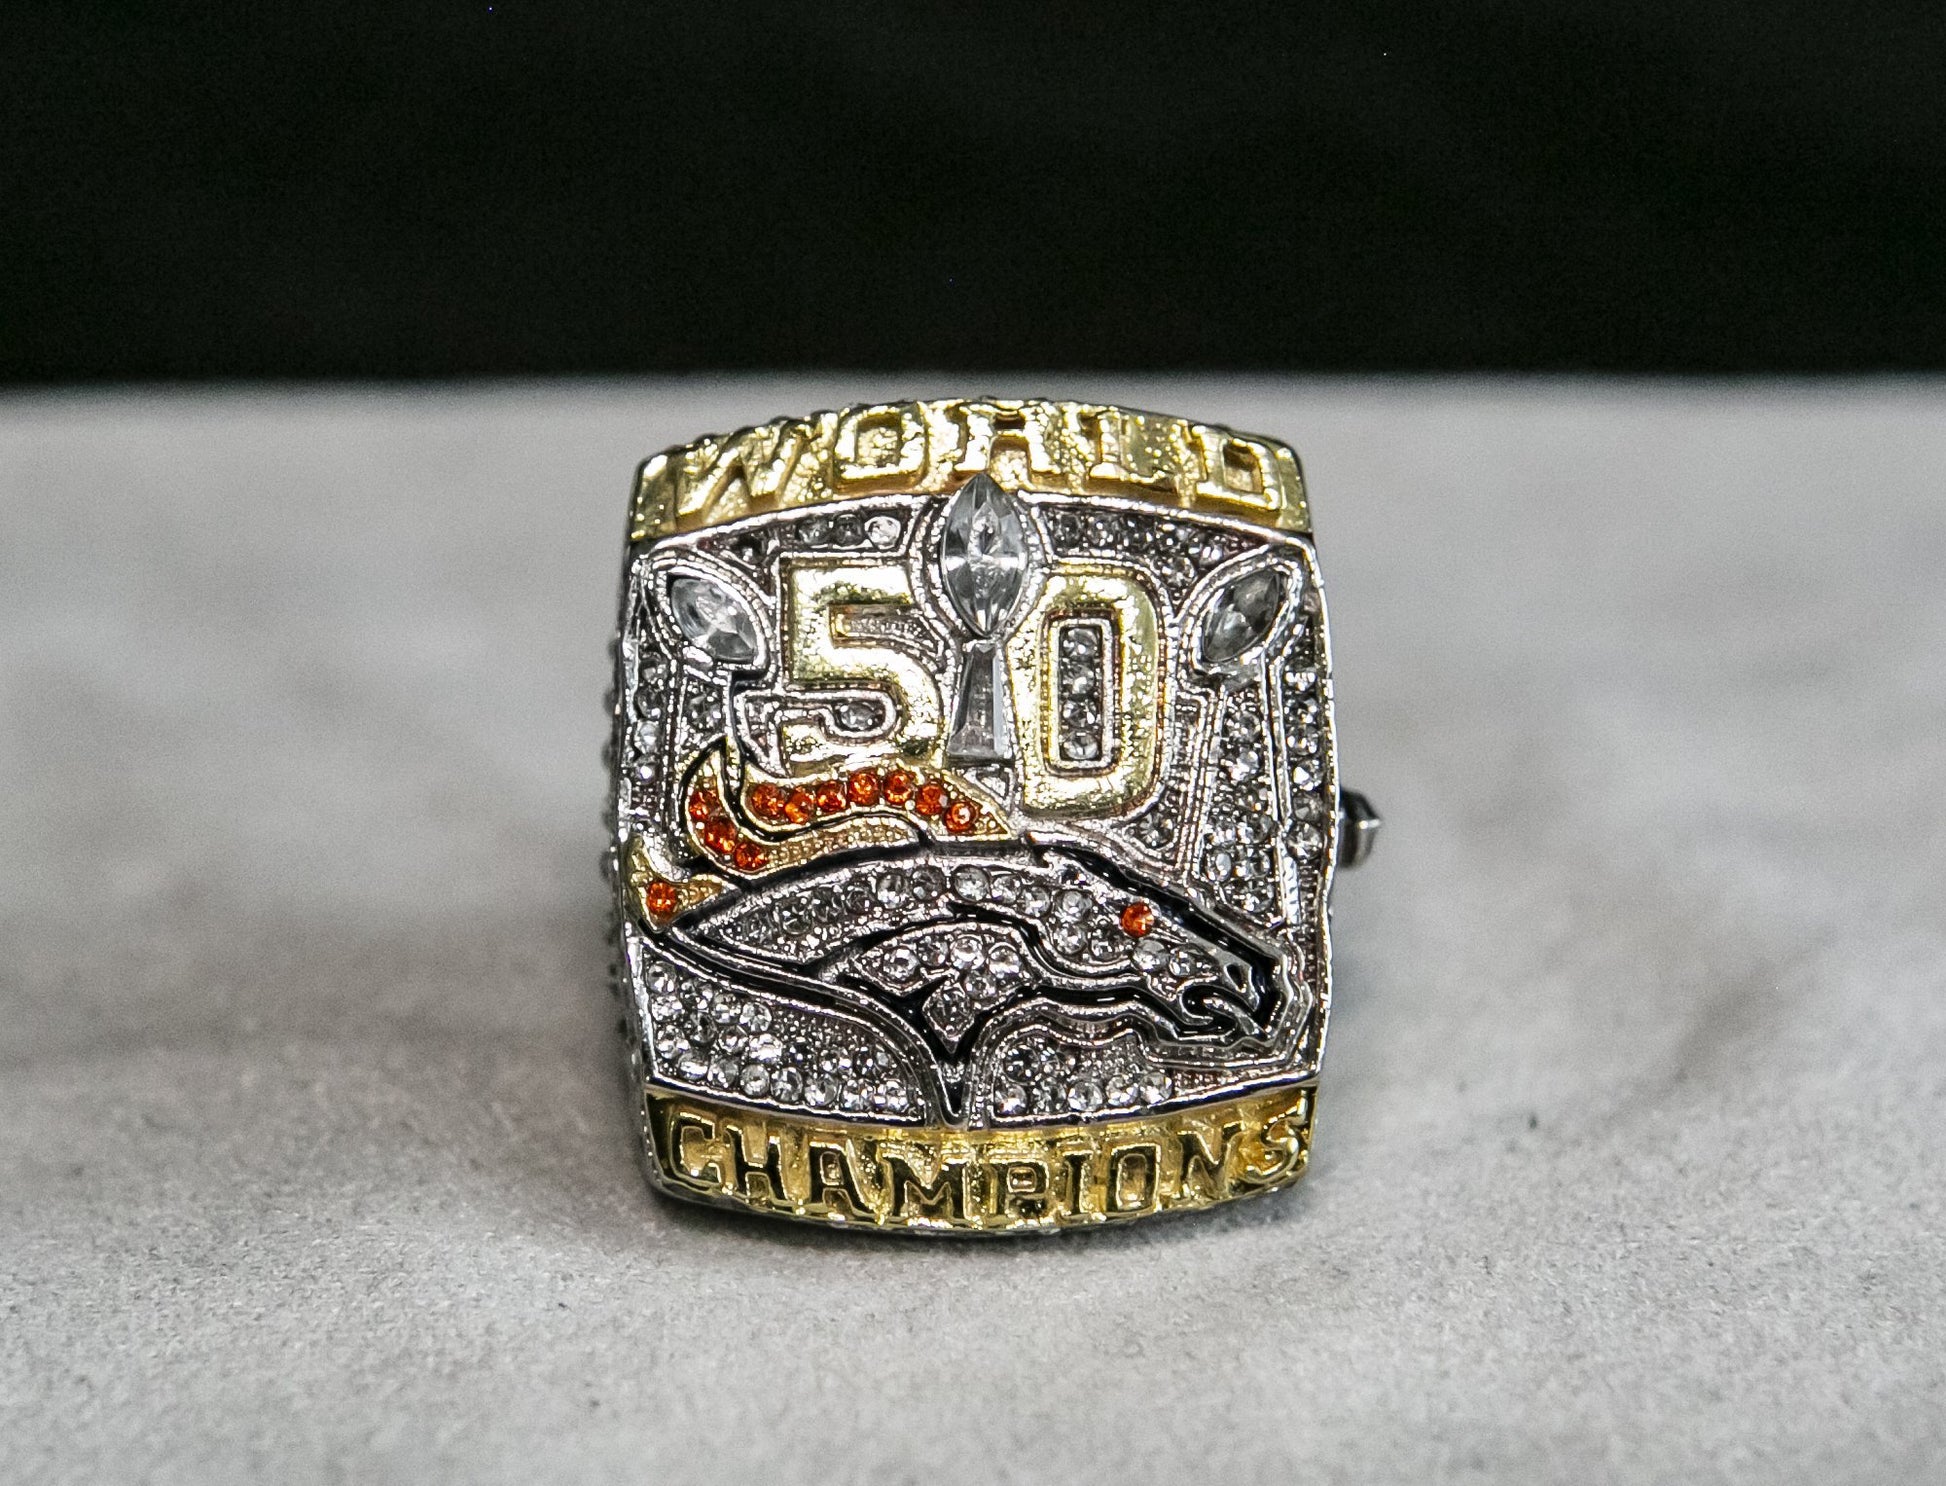 Denver Broncos Super Bowl Ring (2015) - Rings For Champs, NFL rings, MLB rings, NBA rings, NHL rings, NCAA rings, Super bowl ring, Superbowl ring, Super bowl rings, Superbowl rings, Dallas Cowboys